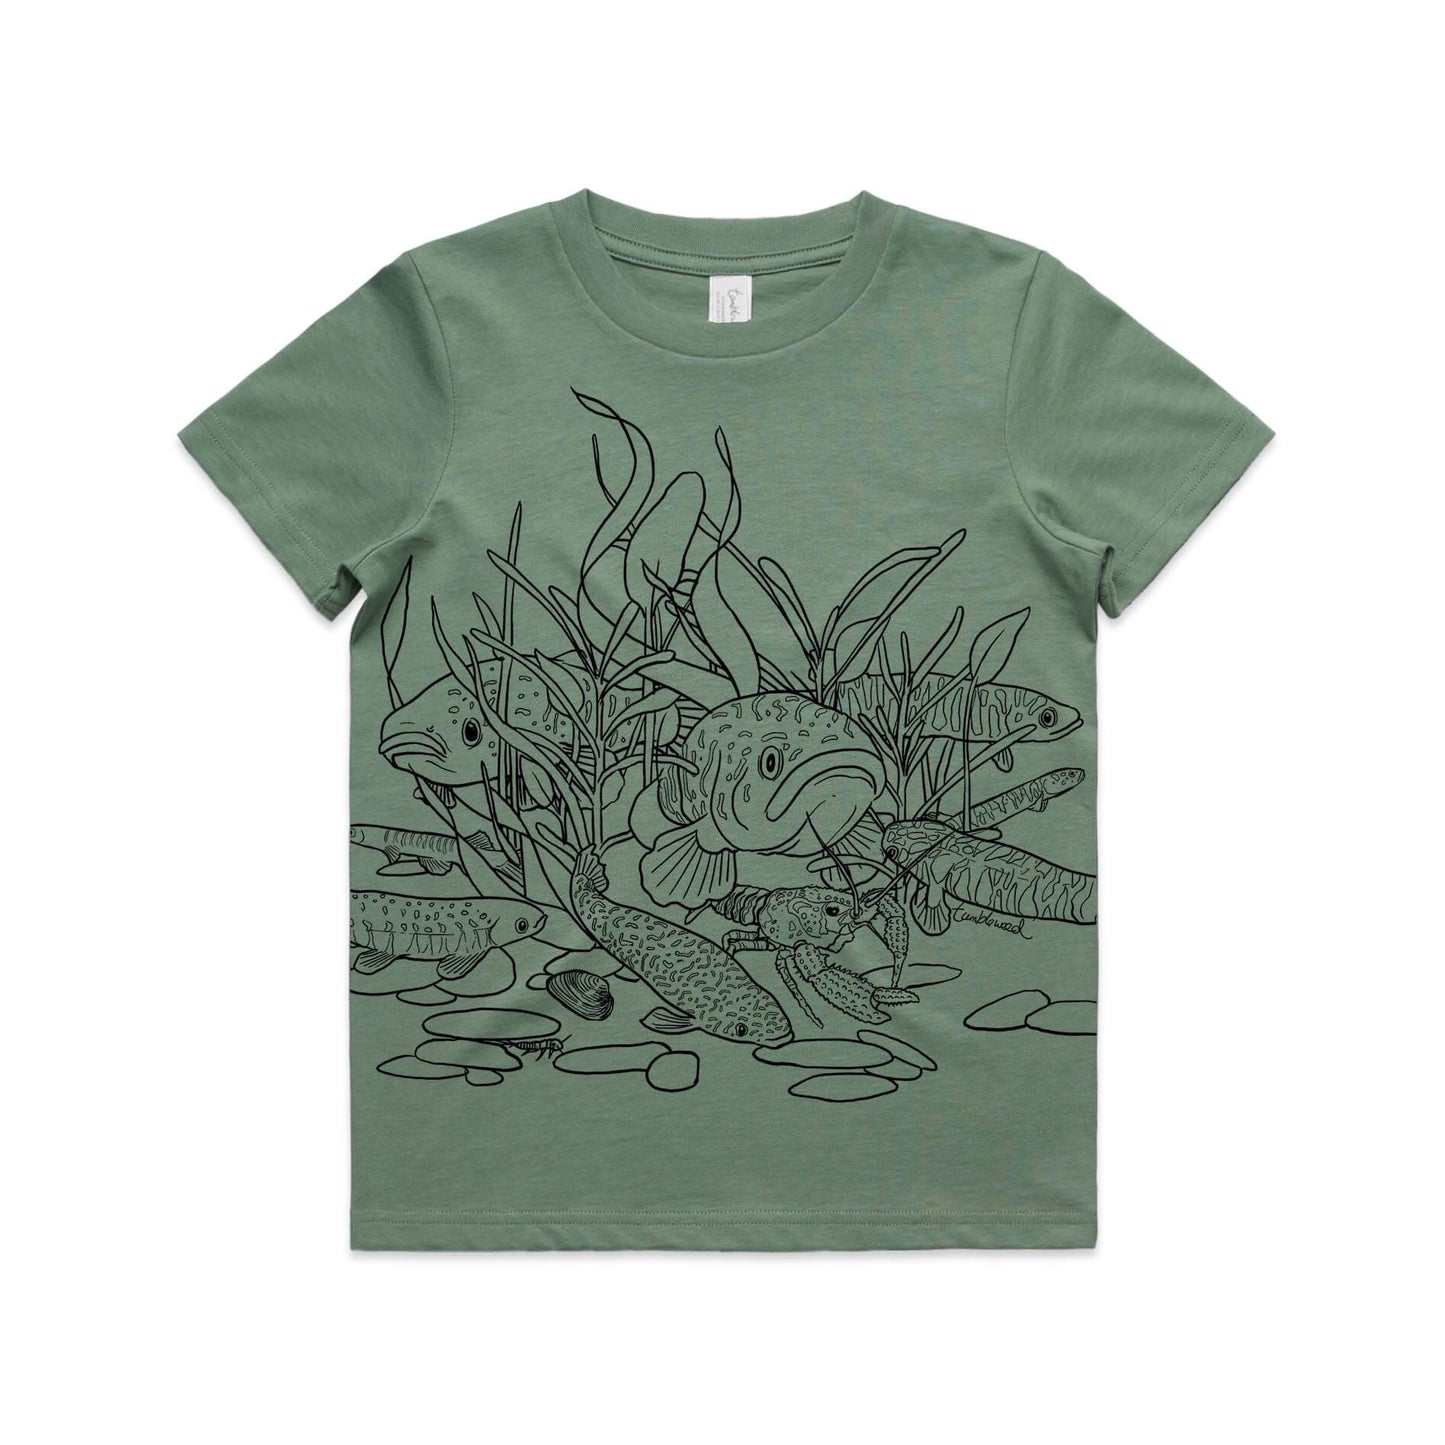 Sage, cotton kids' t-shirt with screen printed freshwater fish design.